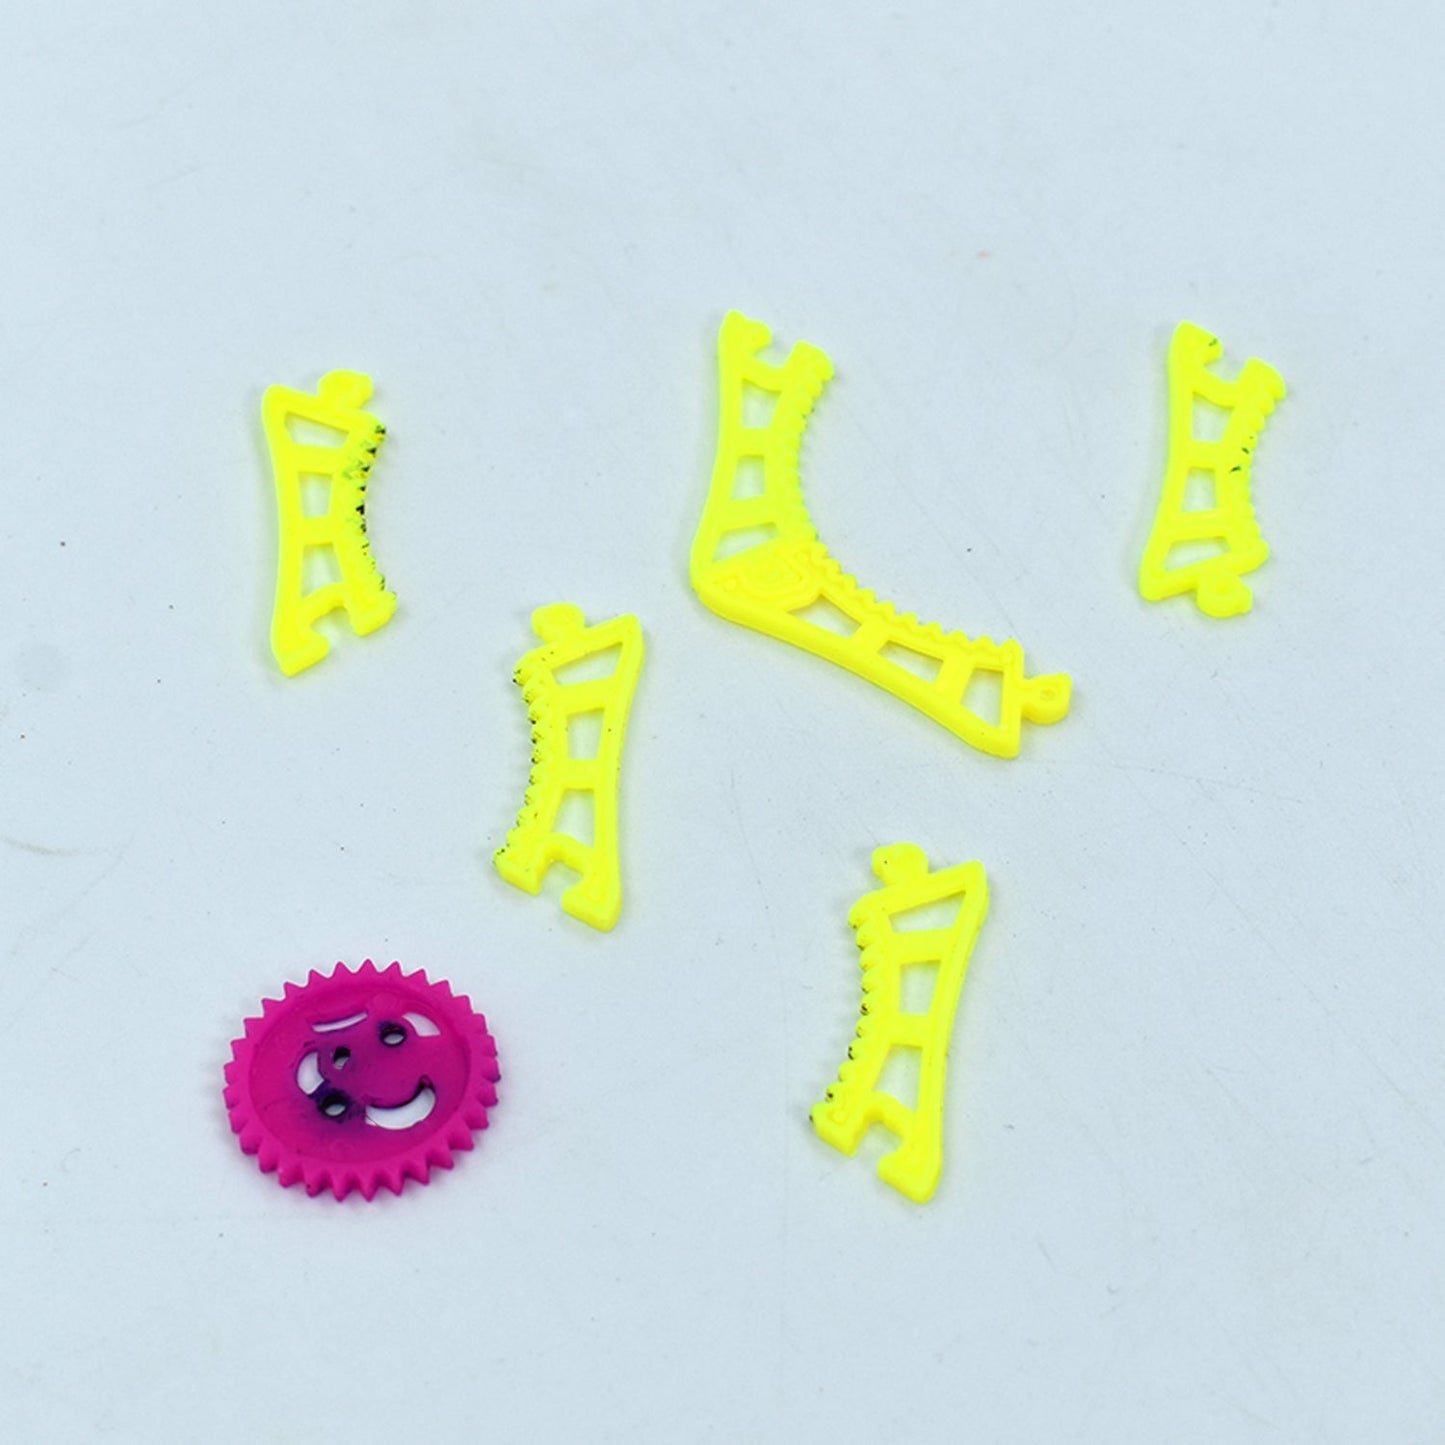 4416 Spirograph Geometric Ruler Drafting Tool Toy for Kids For Fun DeoDap